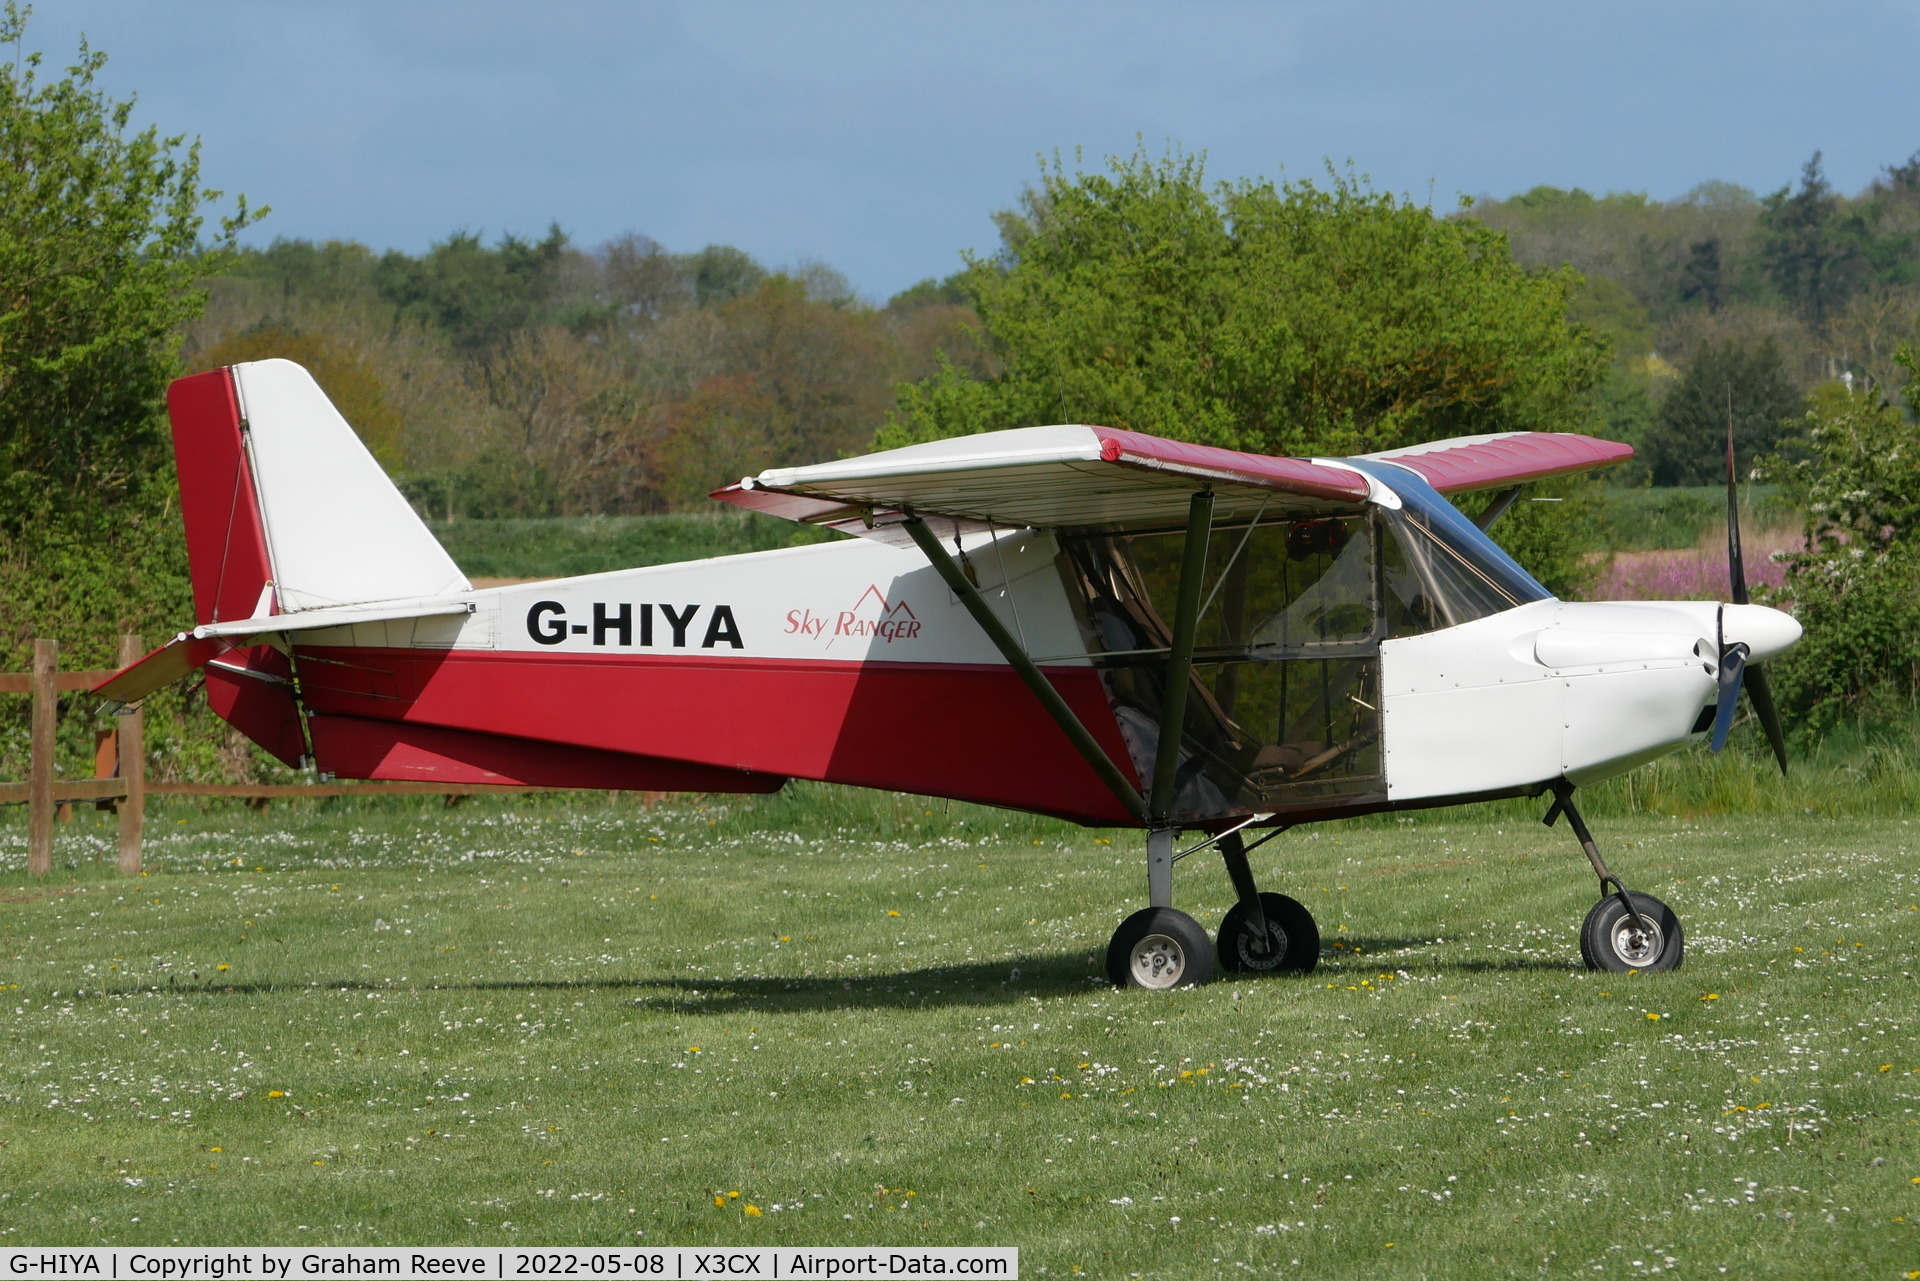 G-HIYA, 2006 Best Off Skyranger 912(2) C/N BMAA/HB/493, Parked at Northrepps.